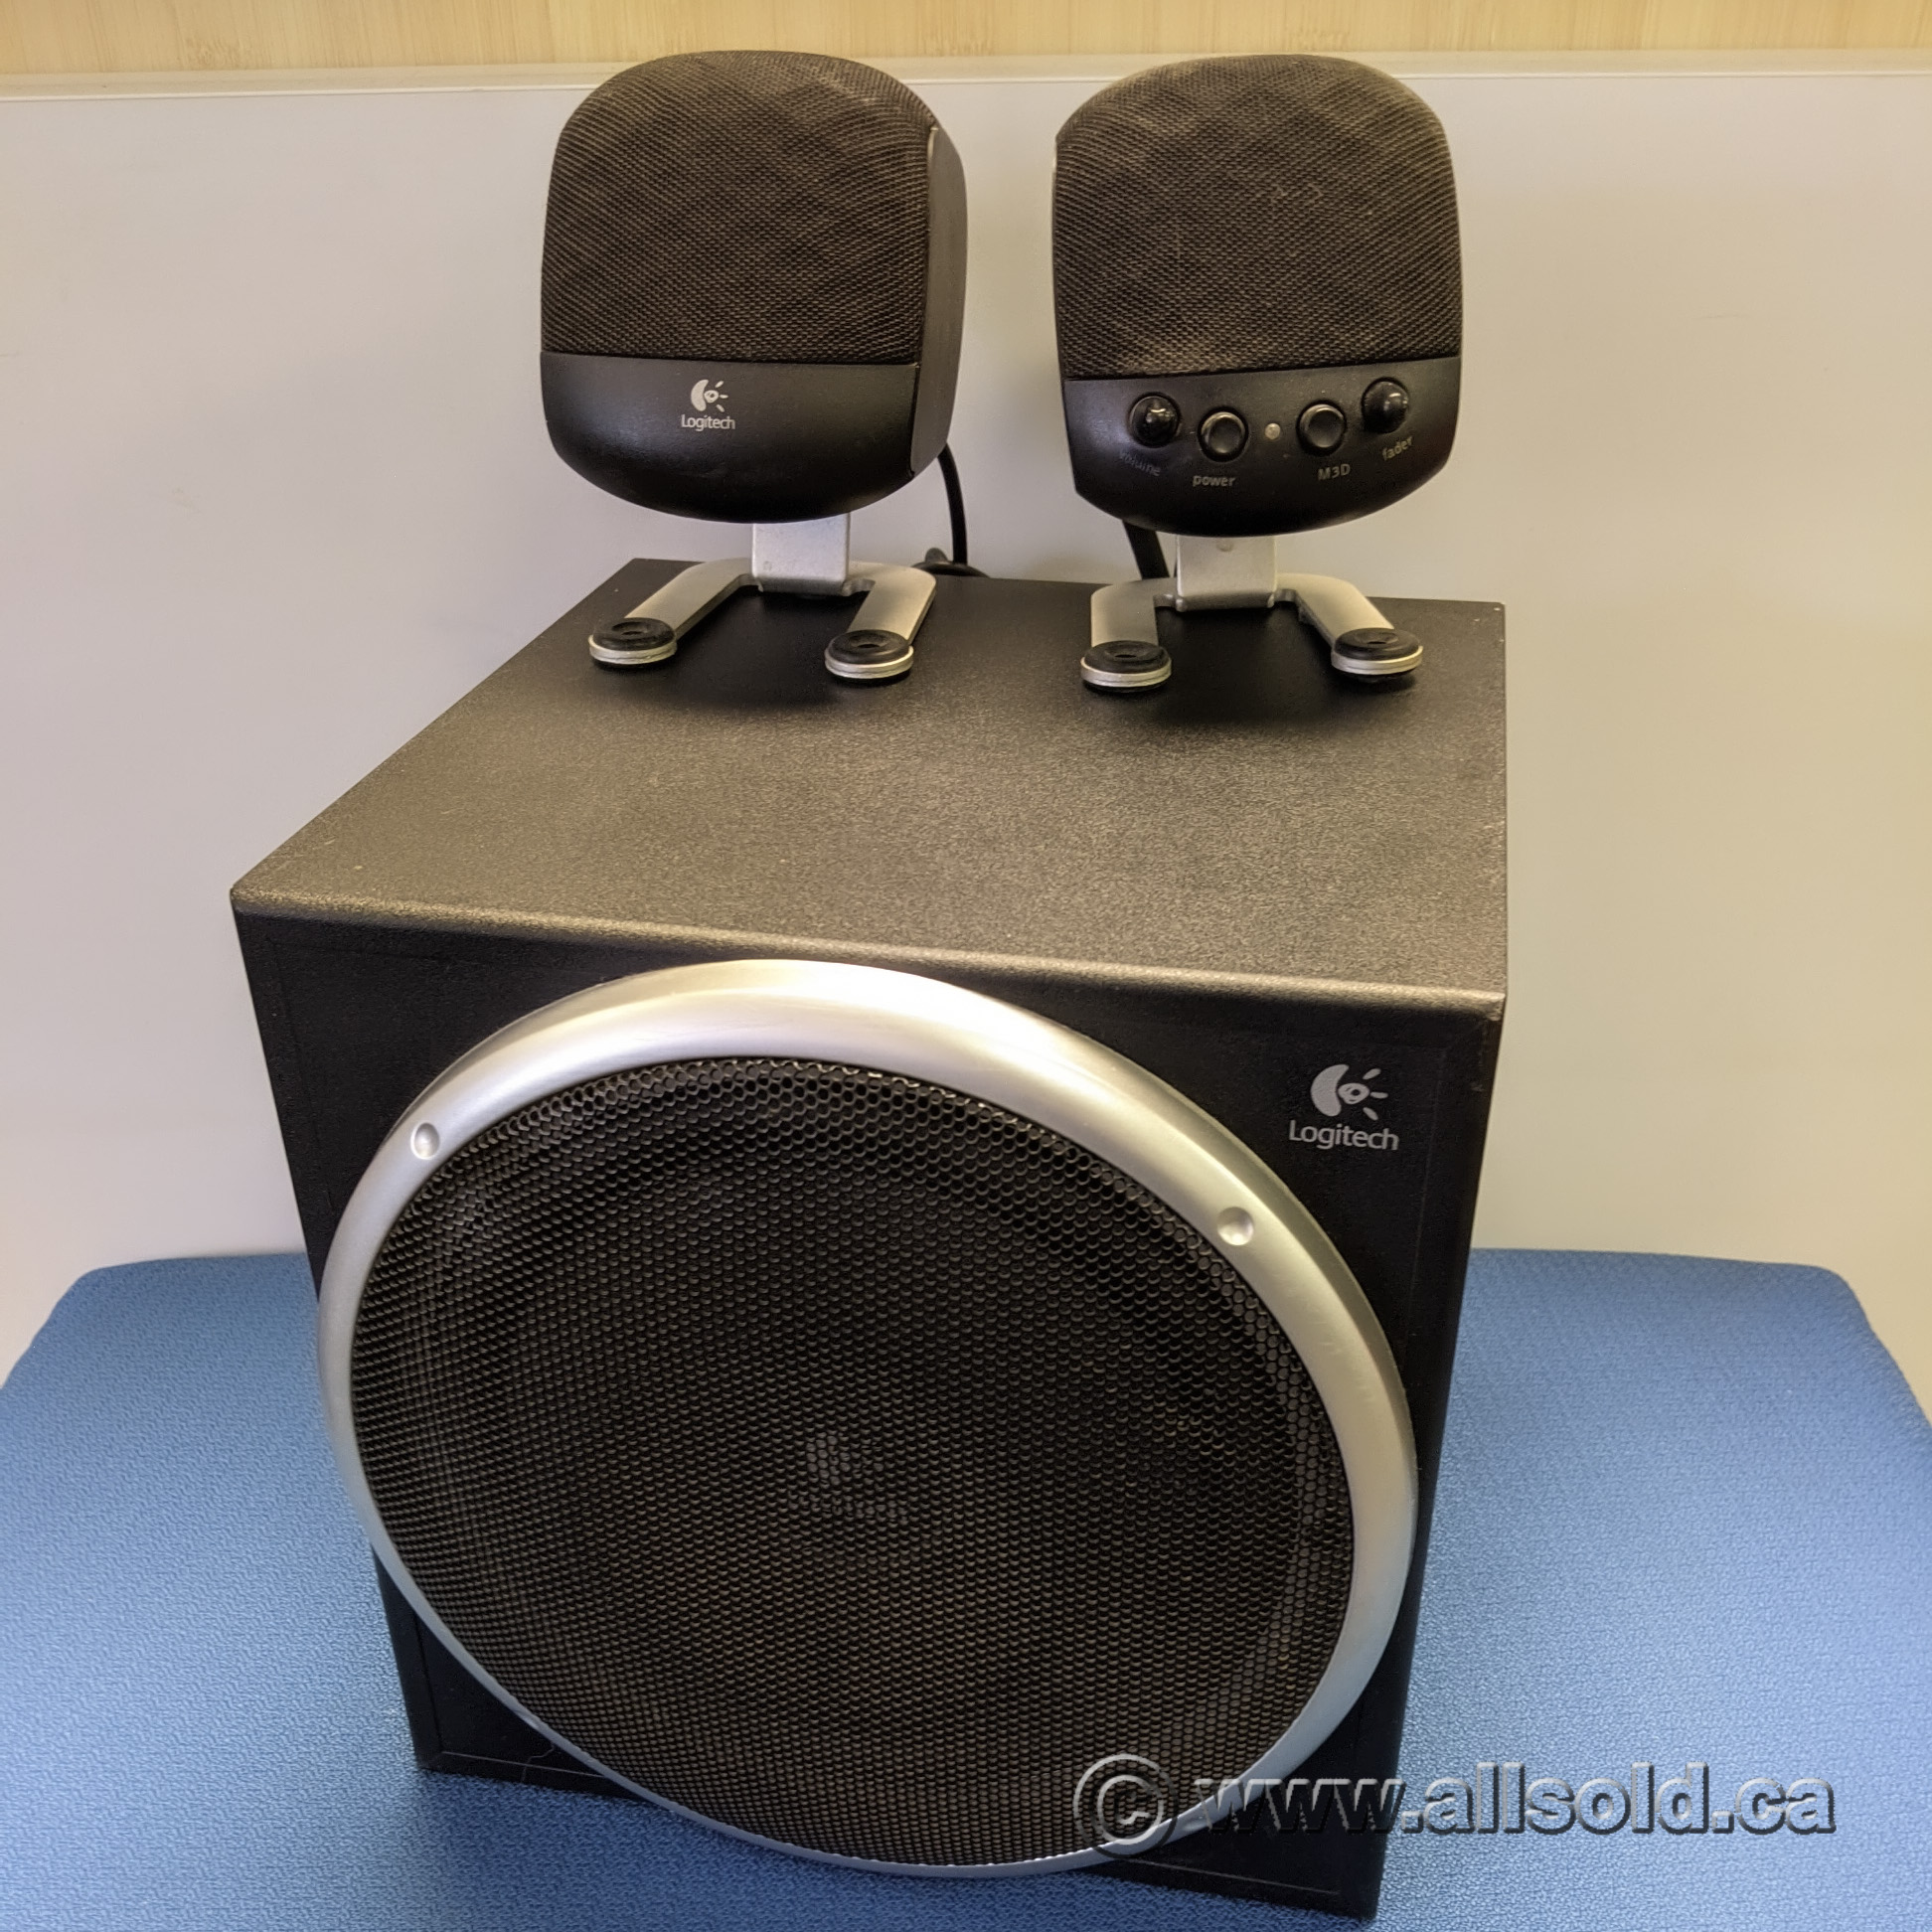 Logitech Z-540 Speaker System w/ 2 Speakers Subwoofer - Allsold.ca - Buy & Sell Used Office Furniture Calgary